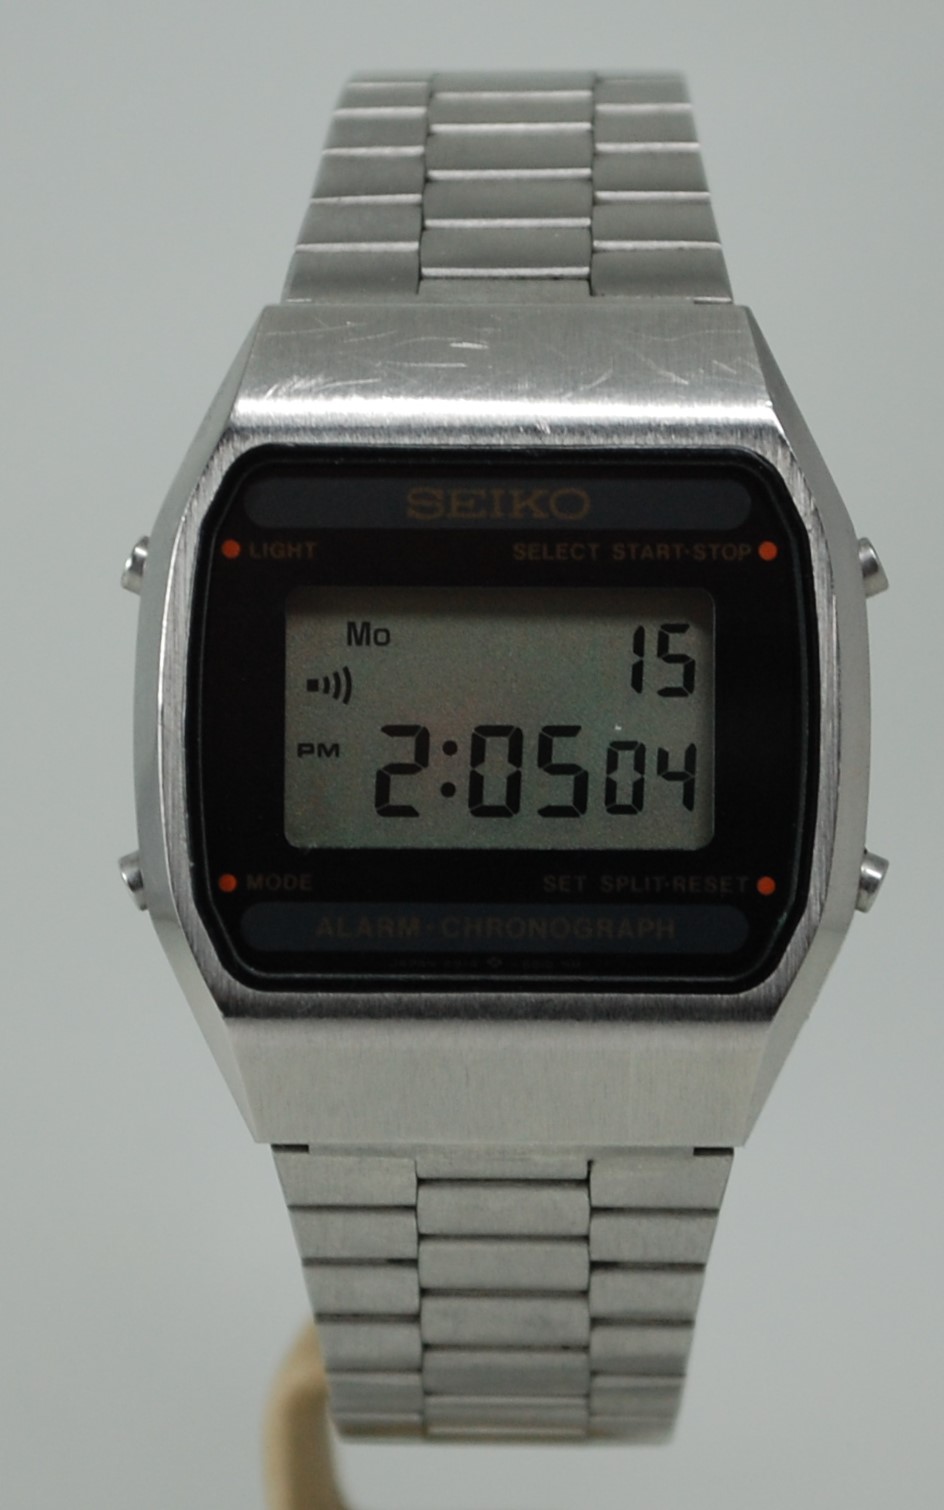 SOLD 1984 Seiko LCD Alarm Chronograph - Birth Year Watches